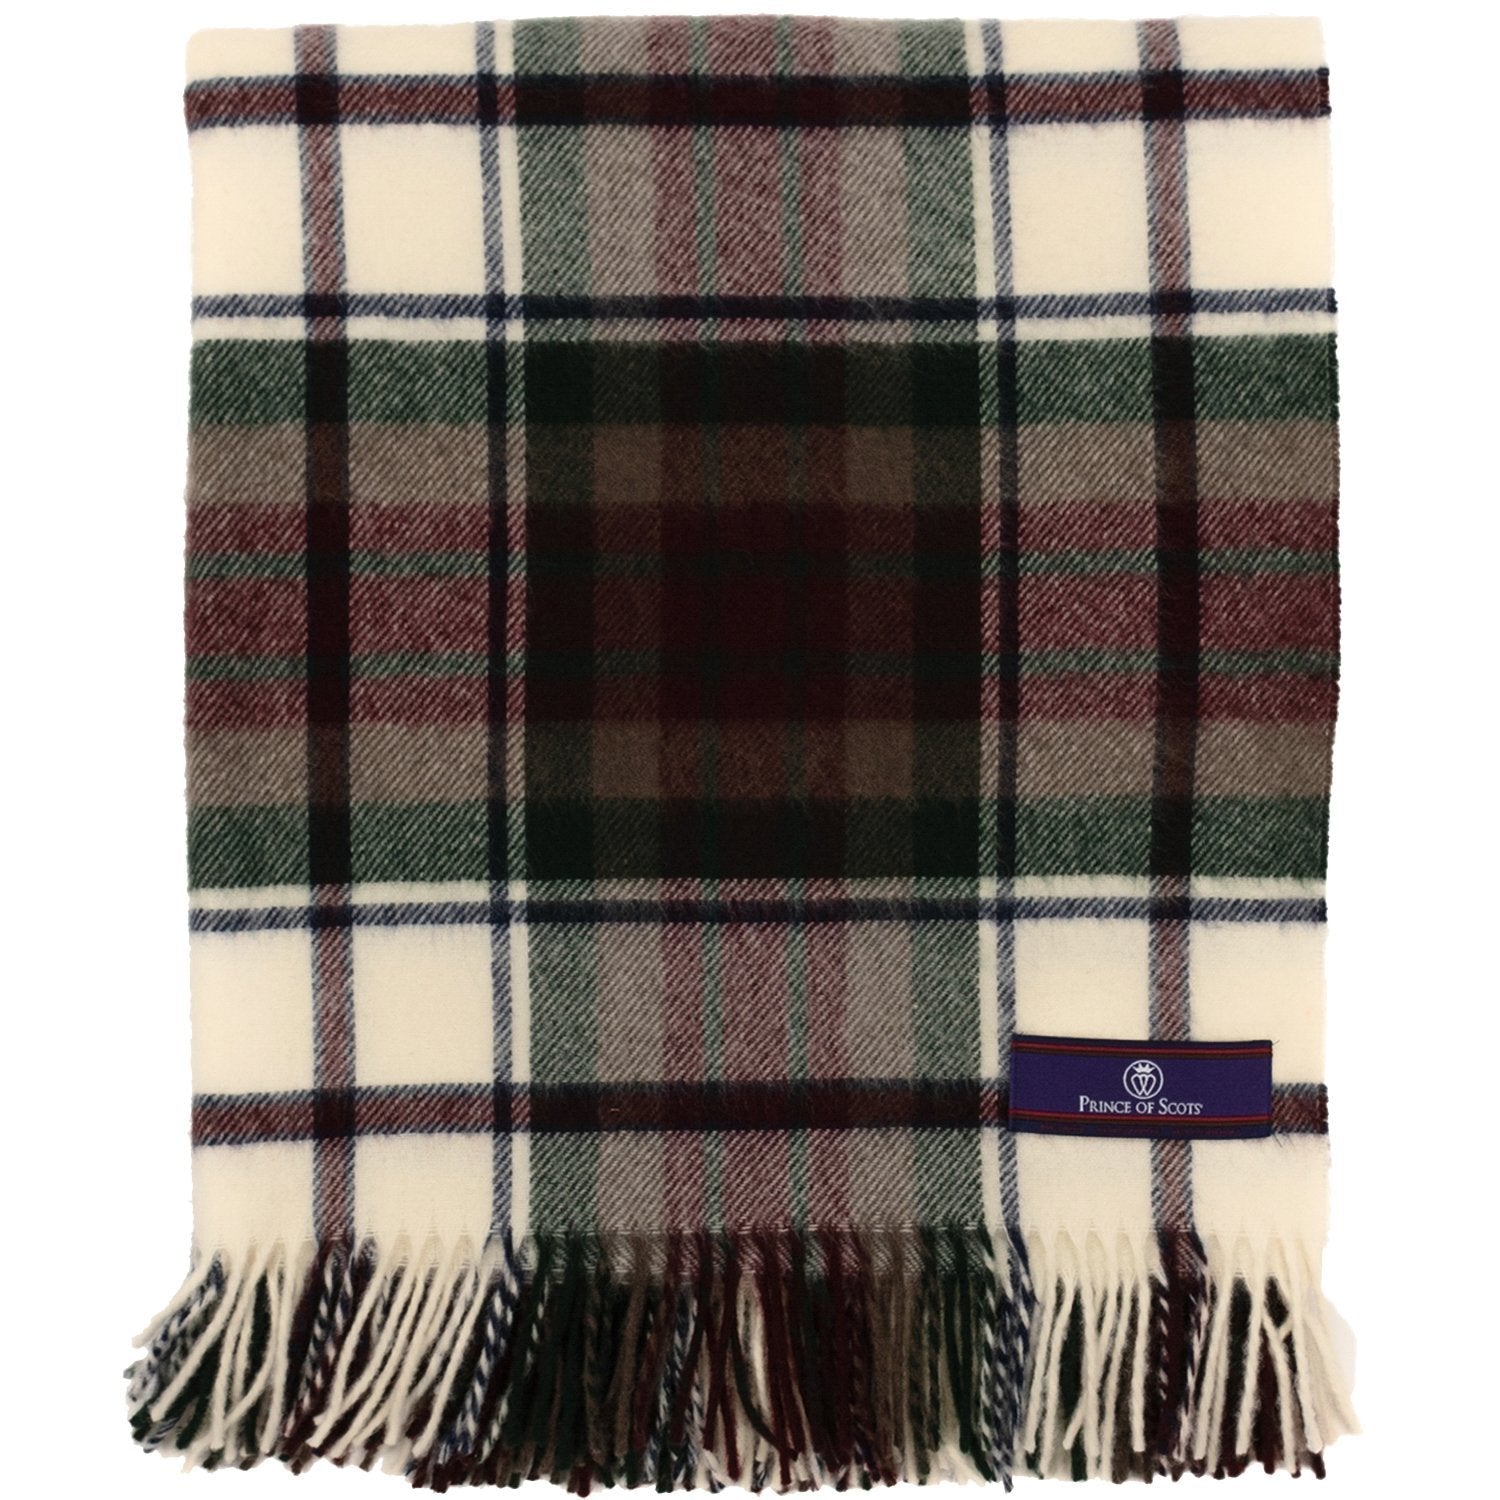 Prince of Scots Highland Tartan Tweed Merino Wool Throw ~ Dress Macduff ~-Throws and Blankets-Prince of Scots-Prince of Scots